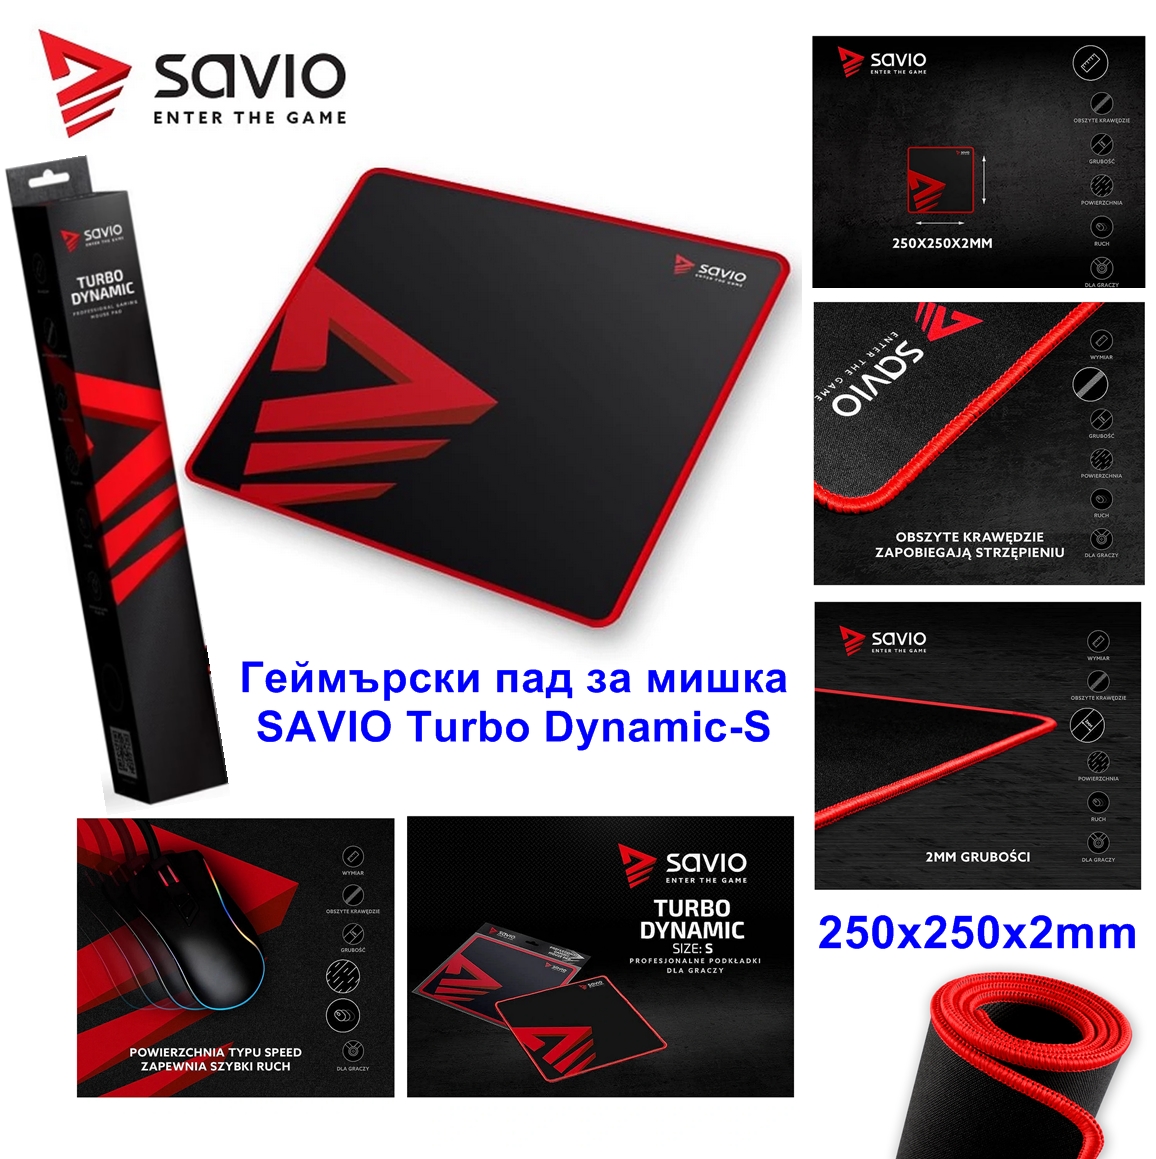 Геймърски пад за мишка SAVIO Turbo Dynamic-S